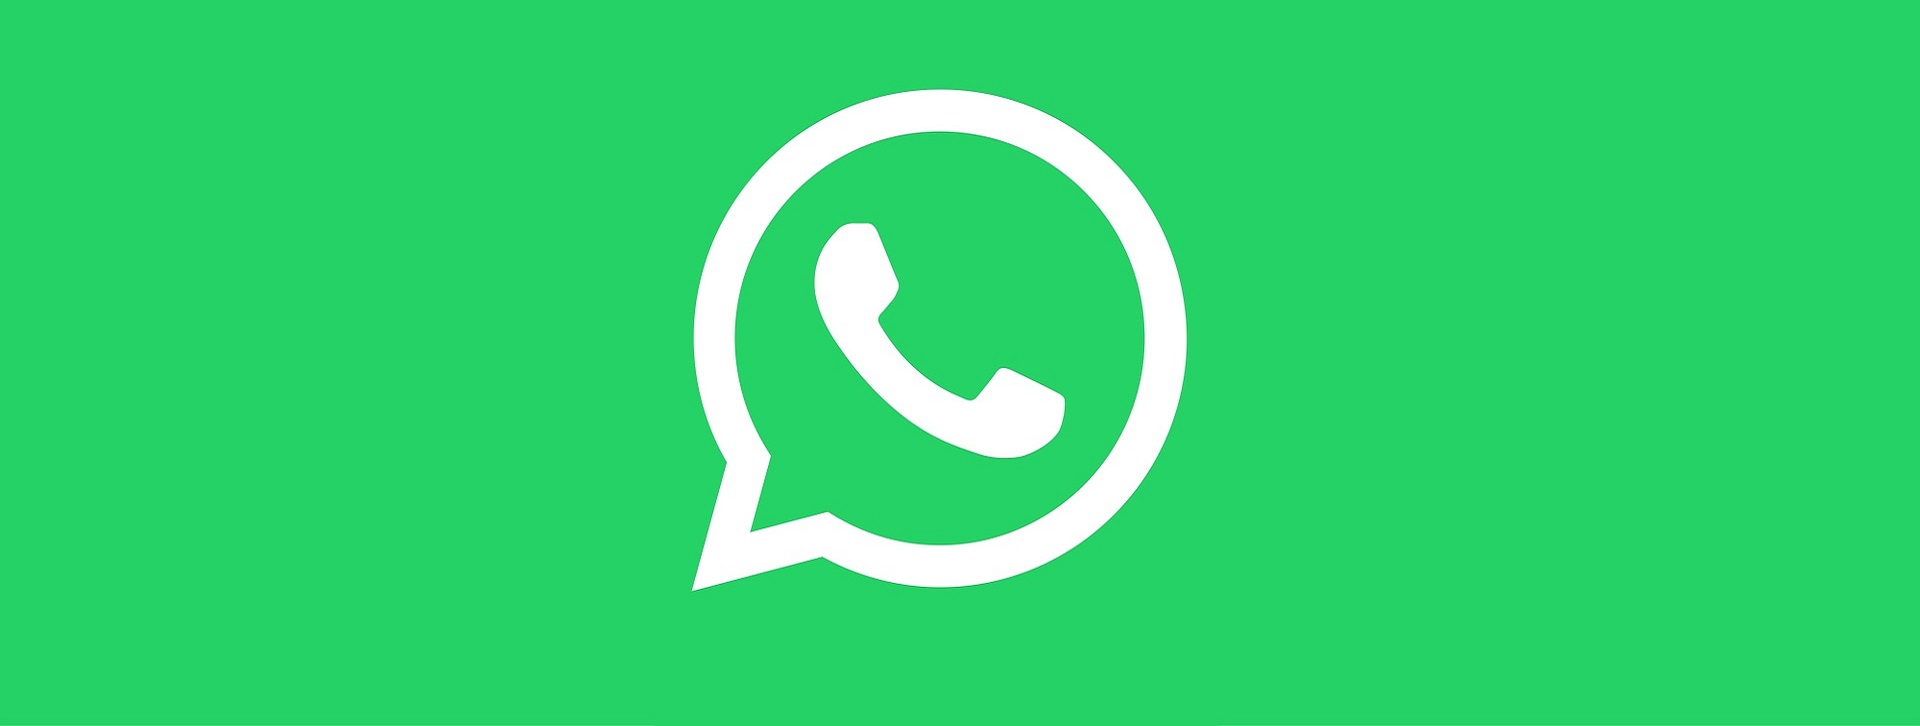 strategie marketing su whatsapp business